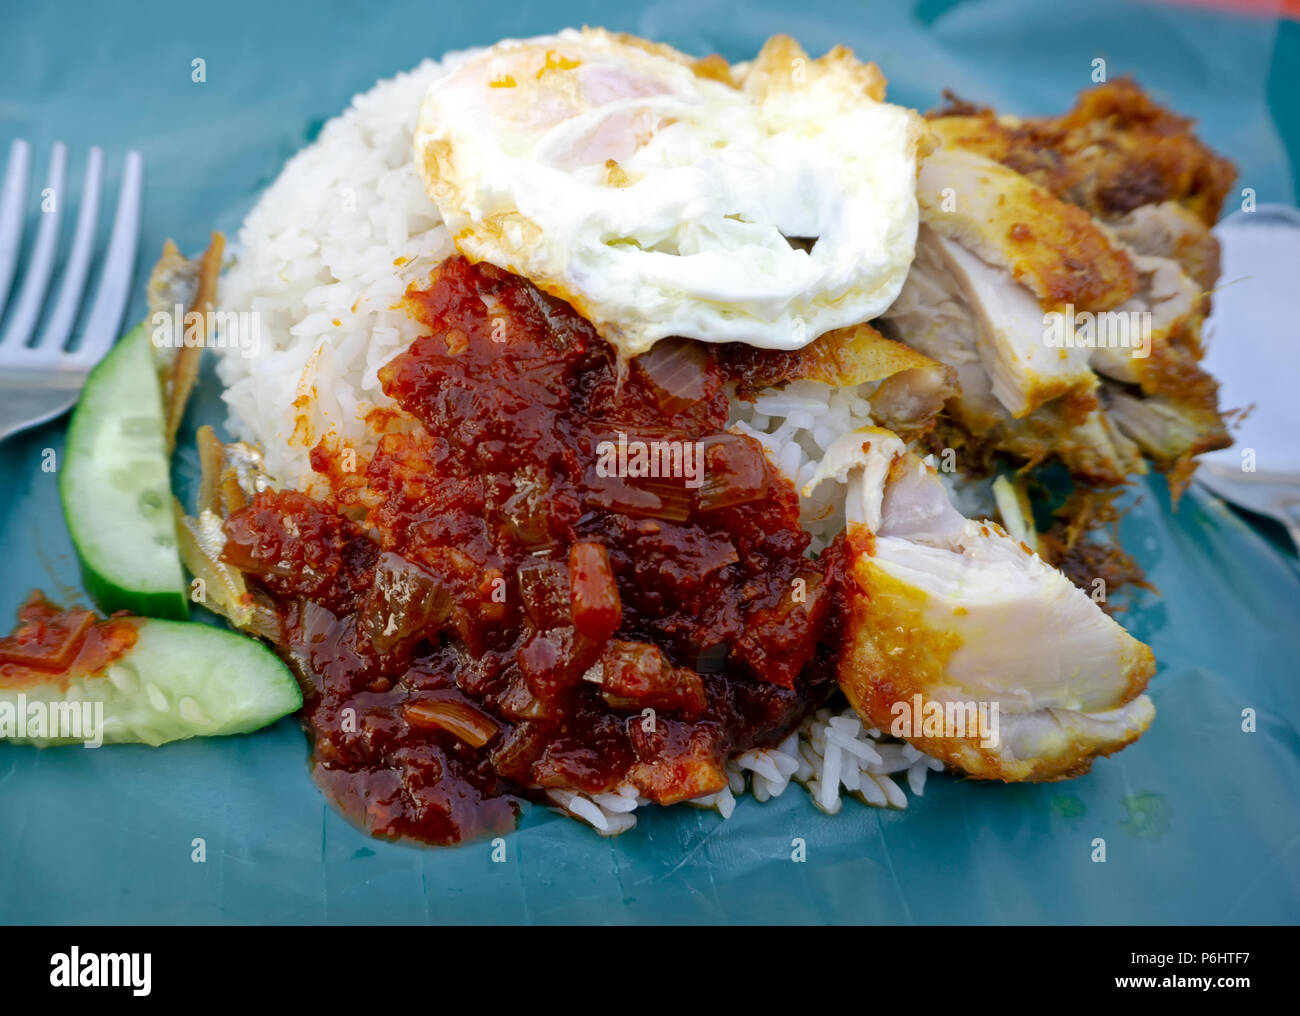 Nasi lemak or coconut milk rice, popular dish in Malaysia. Stock Photo